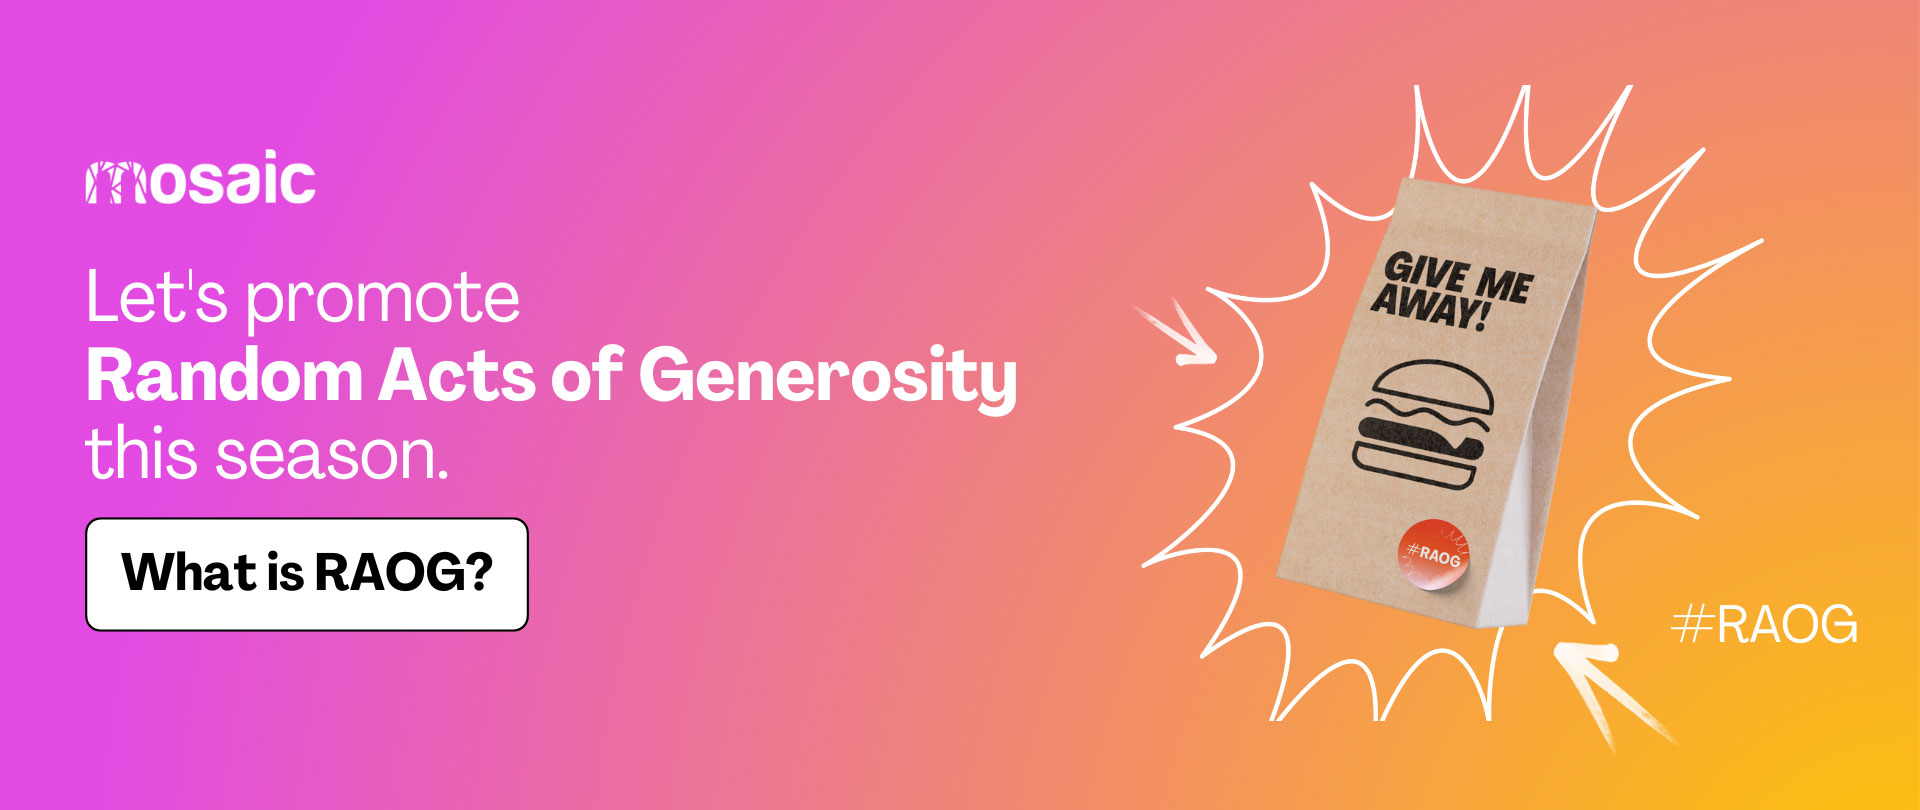 Let's promote Random Acts of Generosity this season.